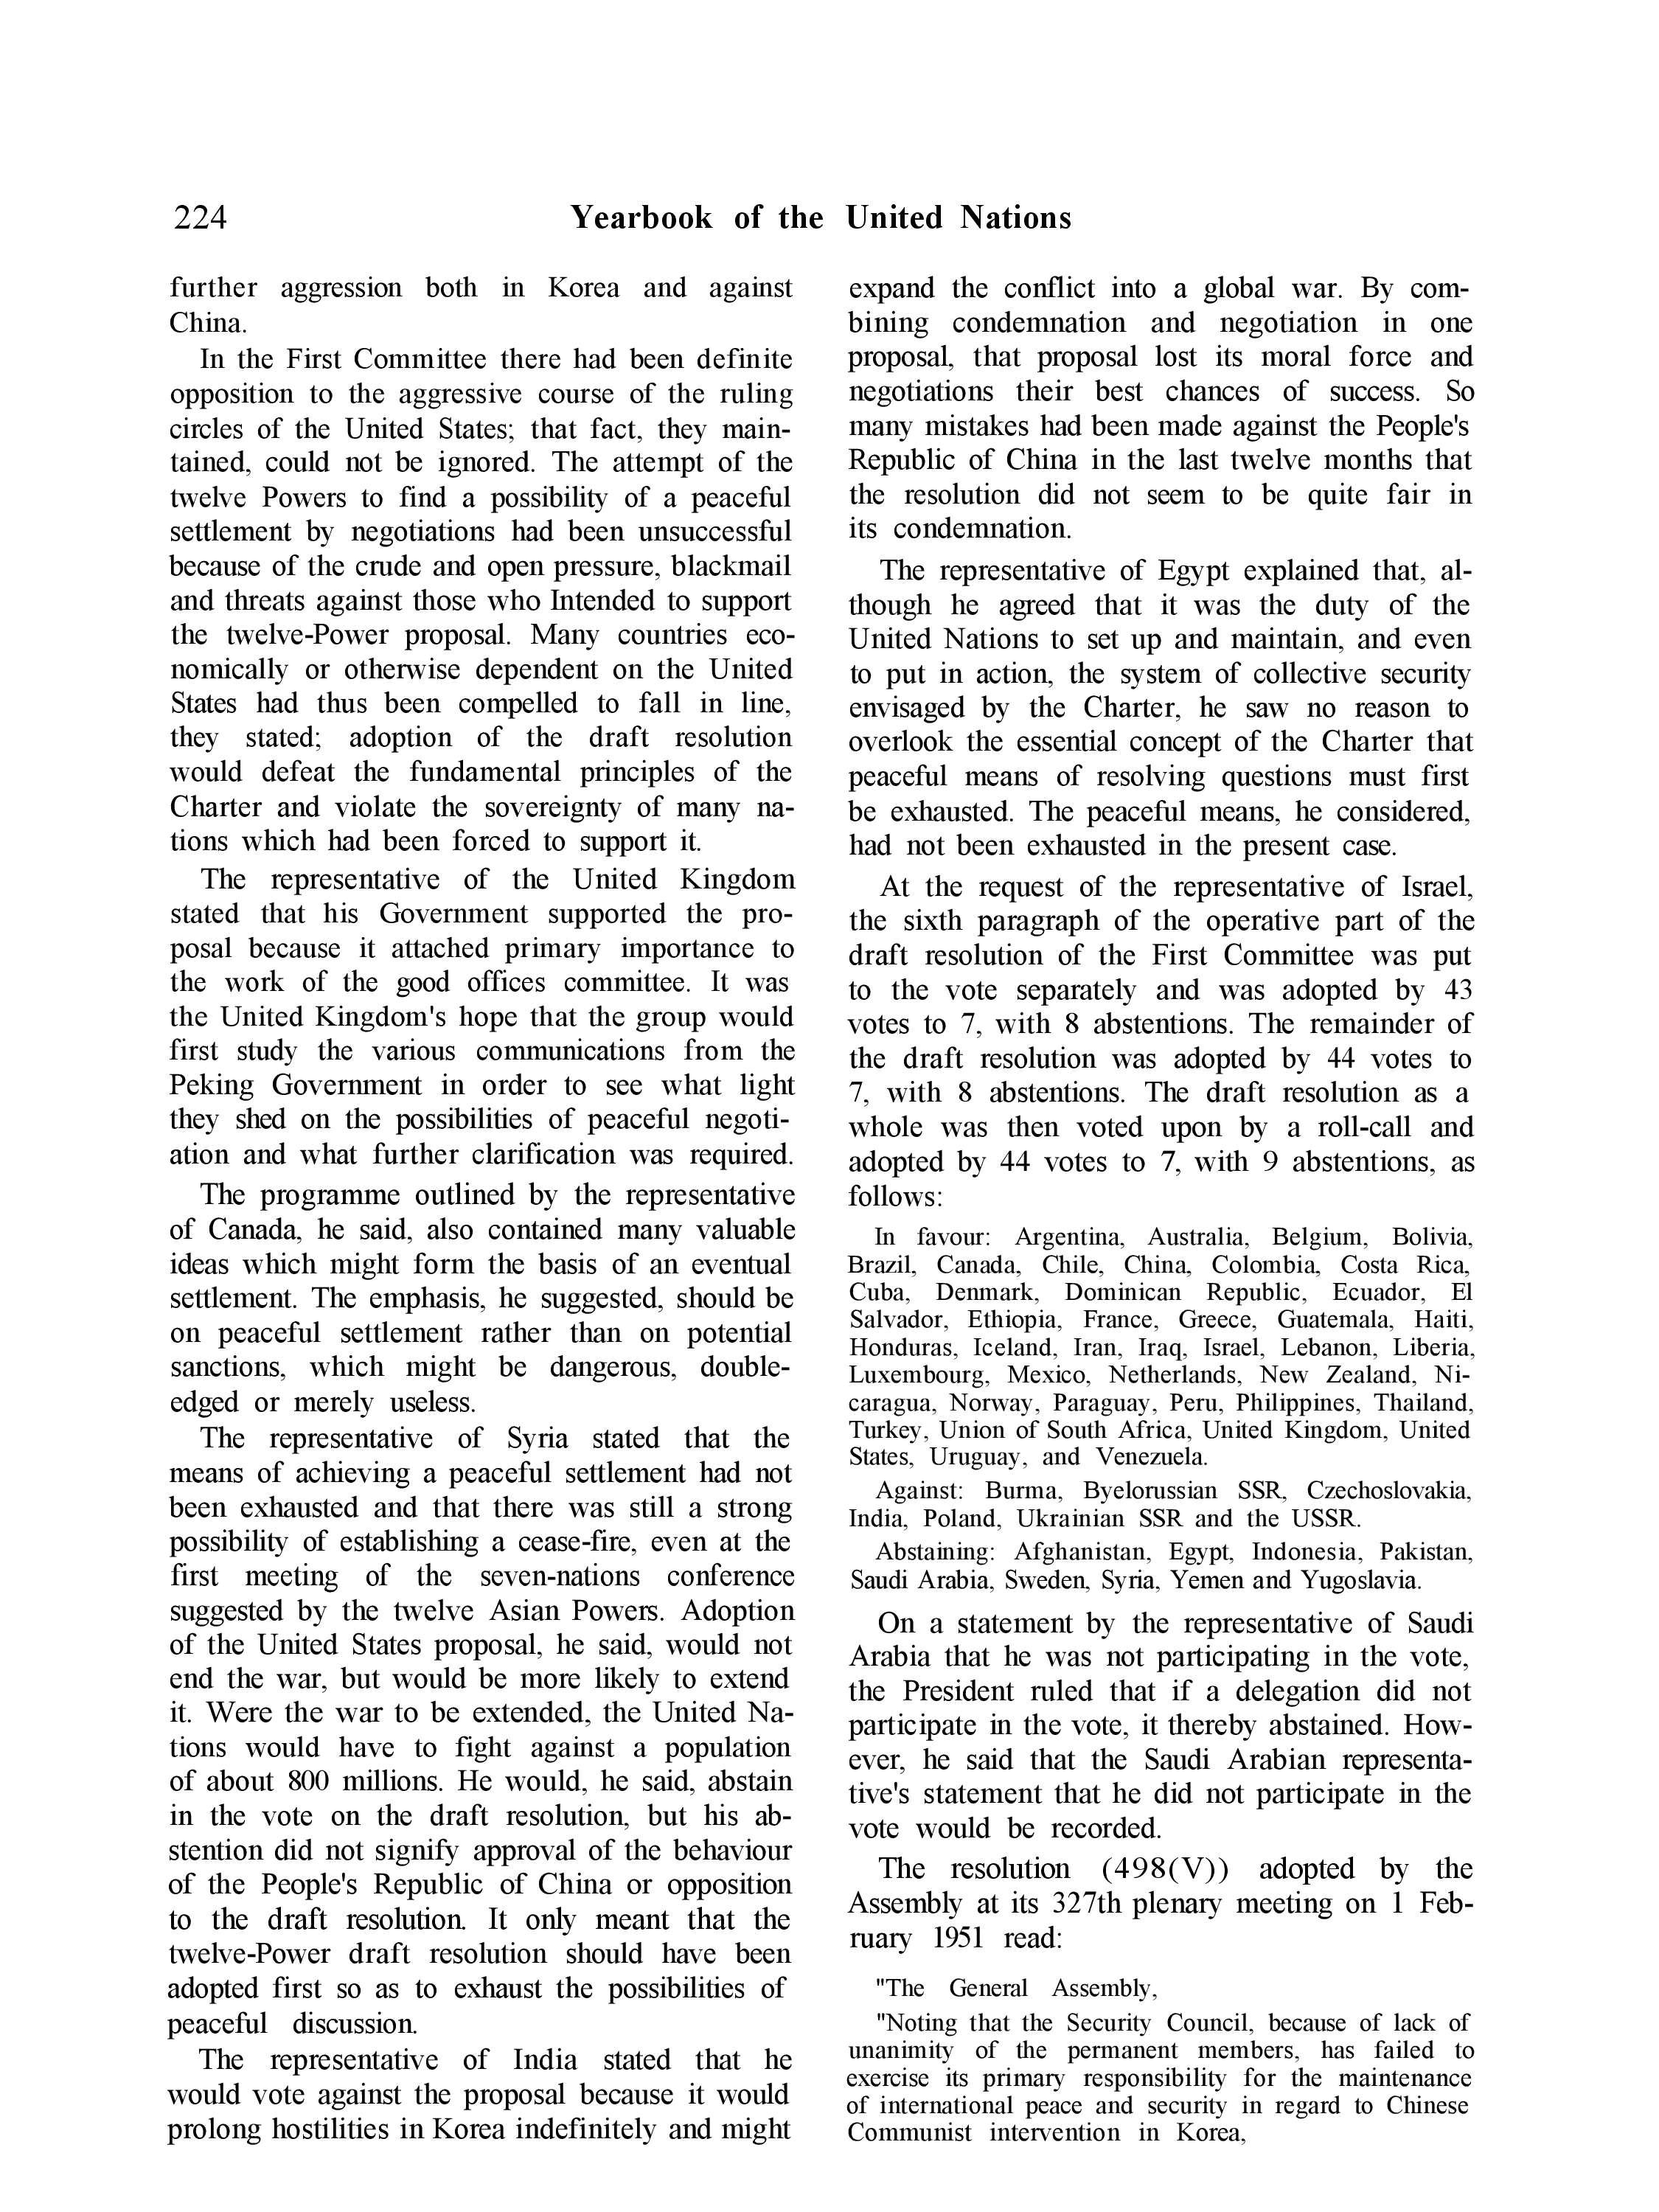 YUN Volume_Page 1951_234